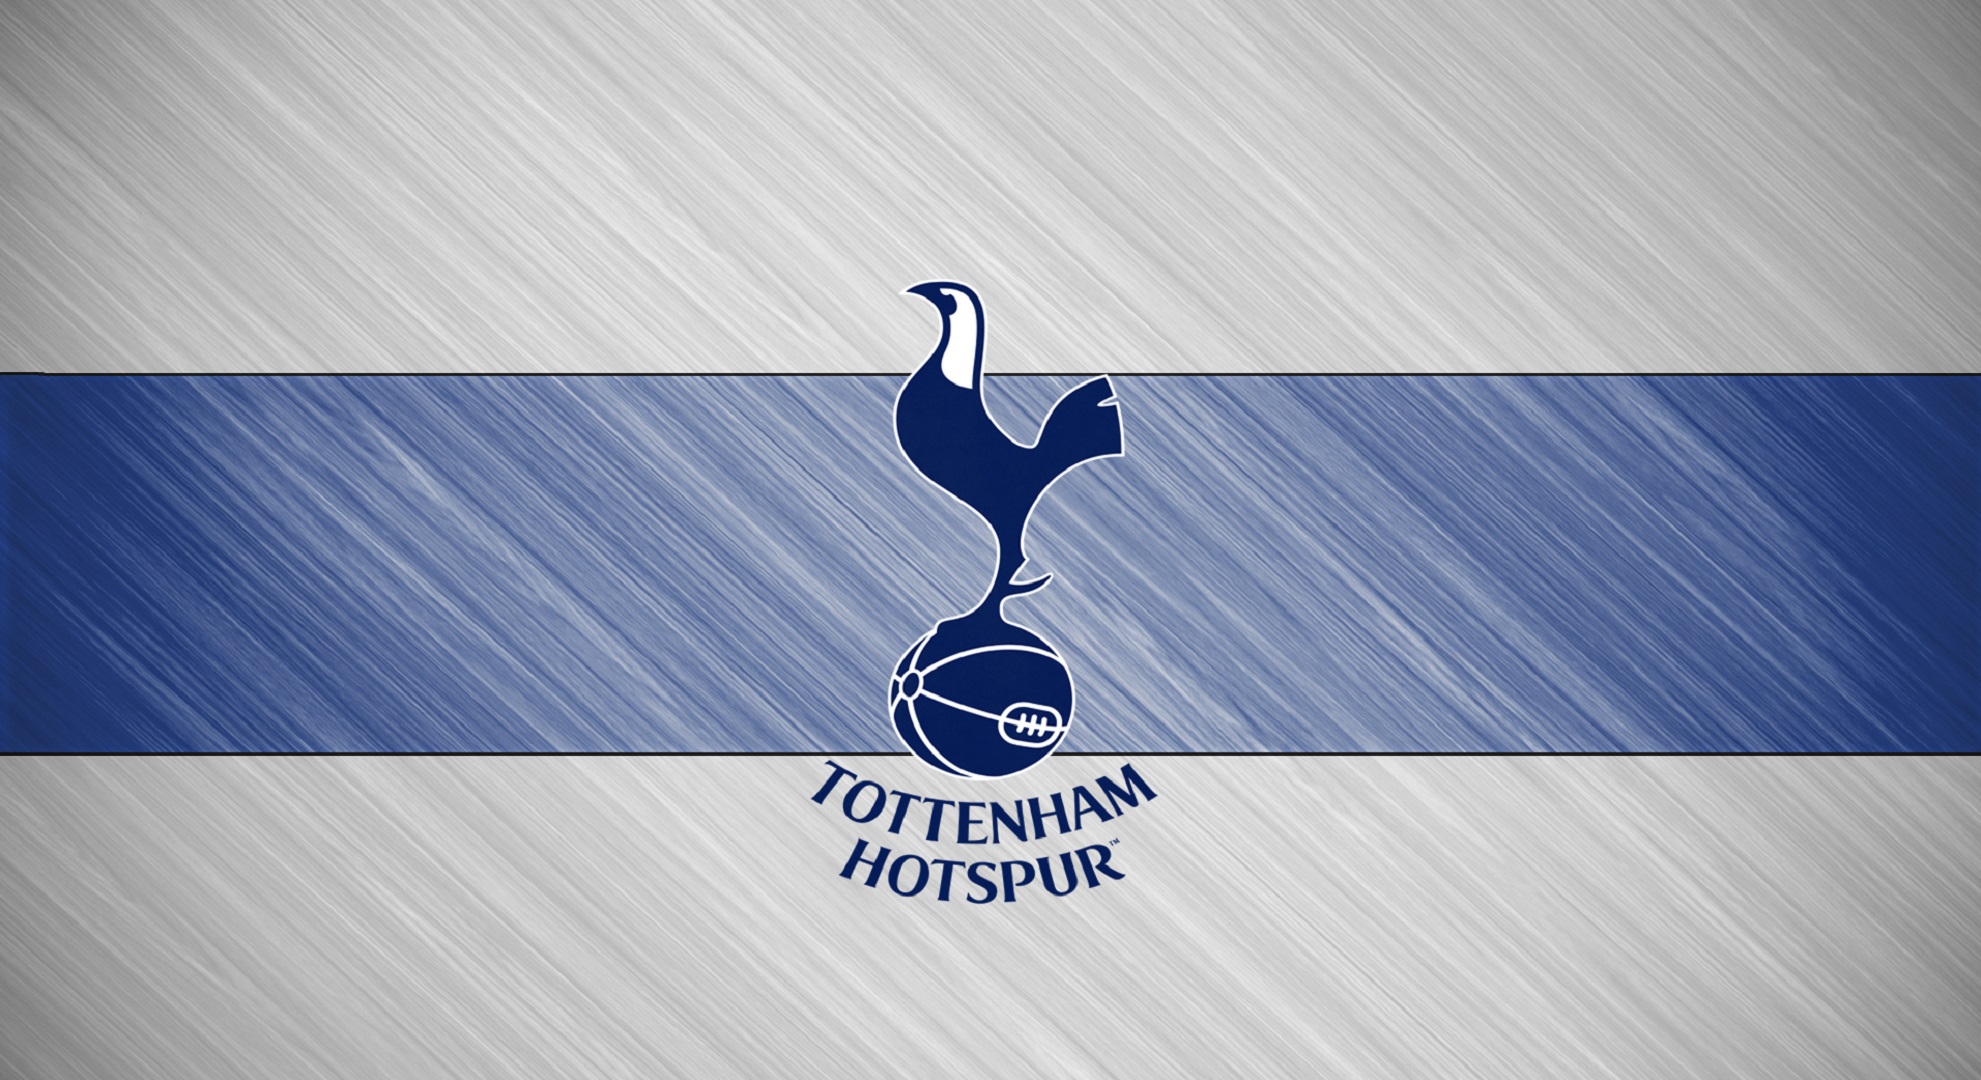 Tottenham Hotspur Wallpaper Image Photos Pictures Background